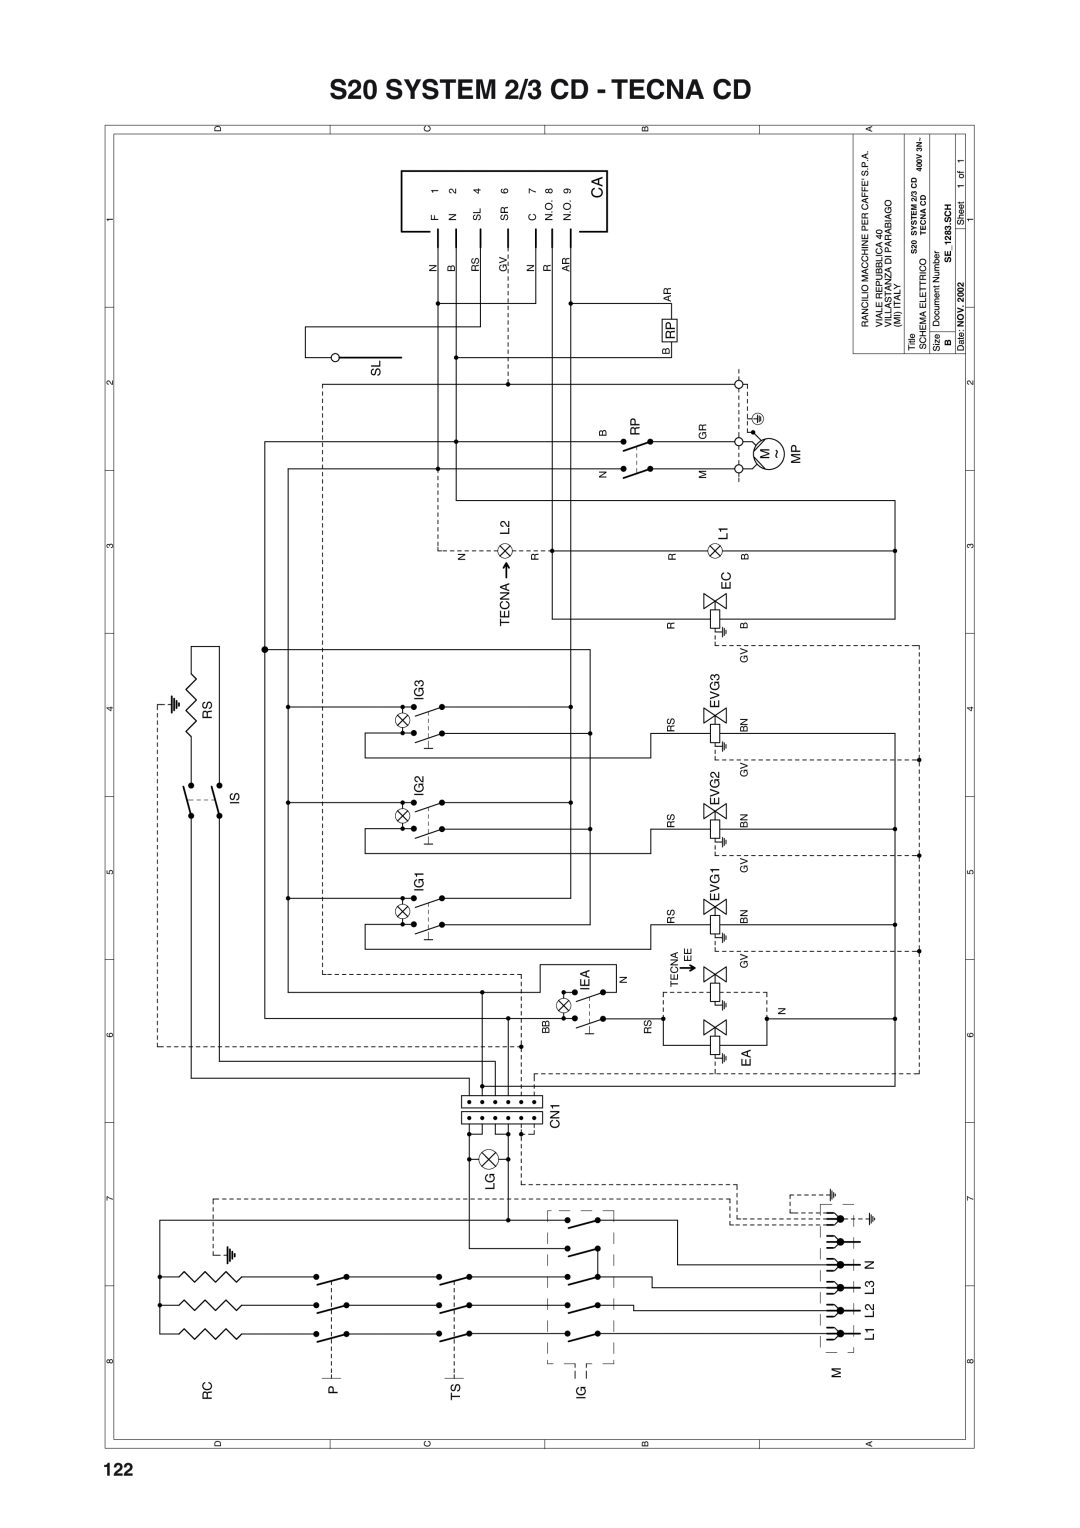 Rancilio manual System, S20 SYSTEM 2/3 CD, 400V 3N~, Tecna Cd 